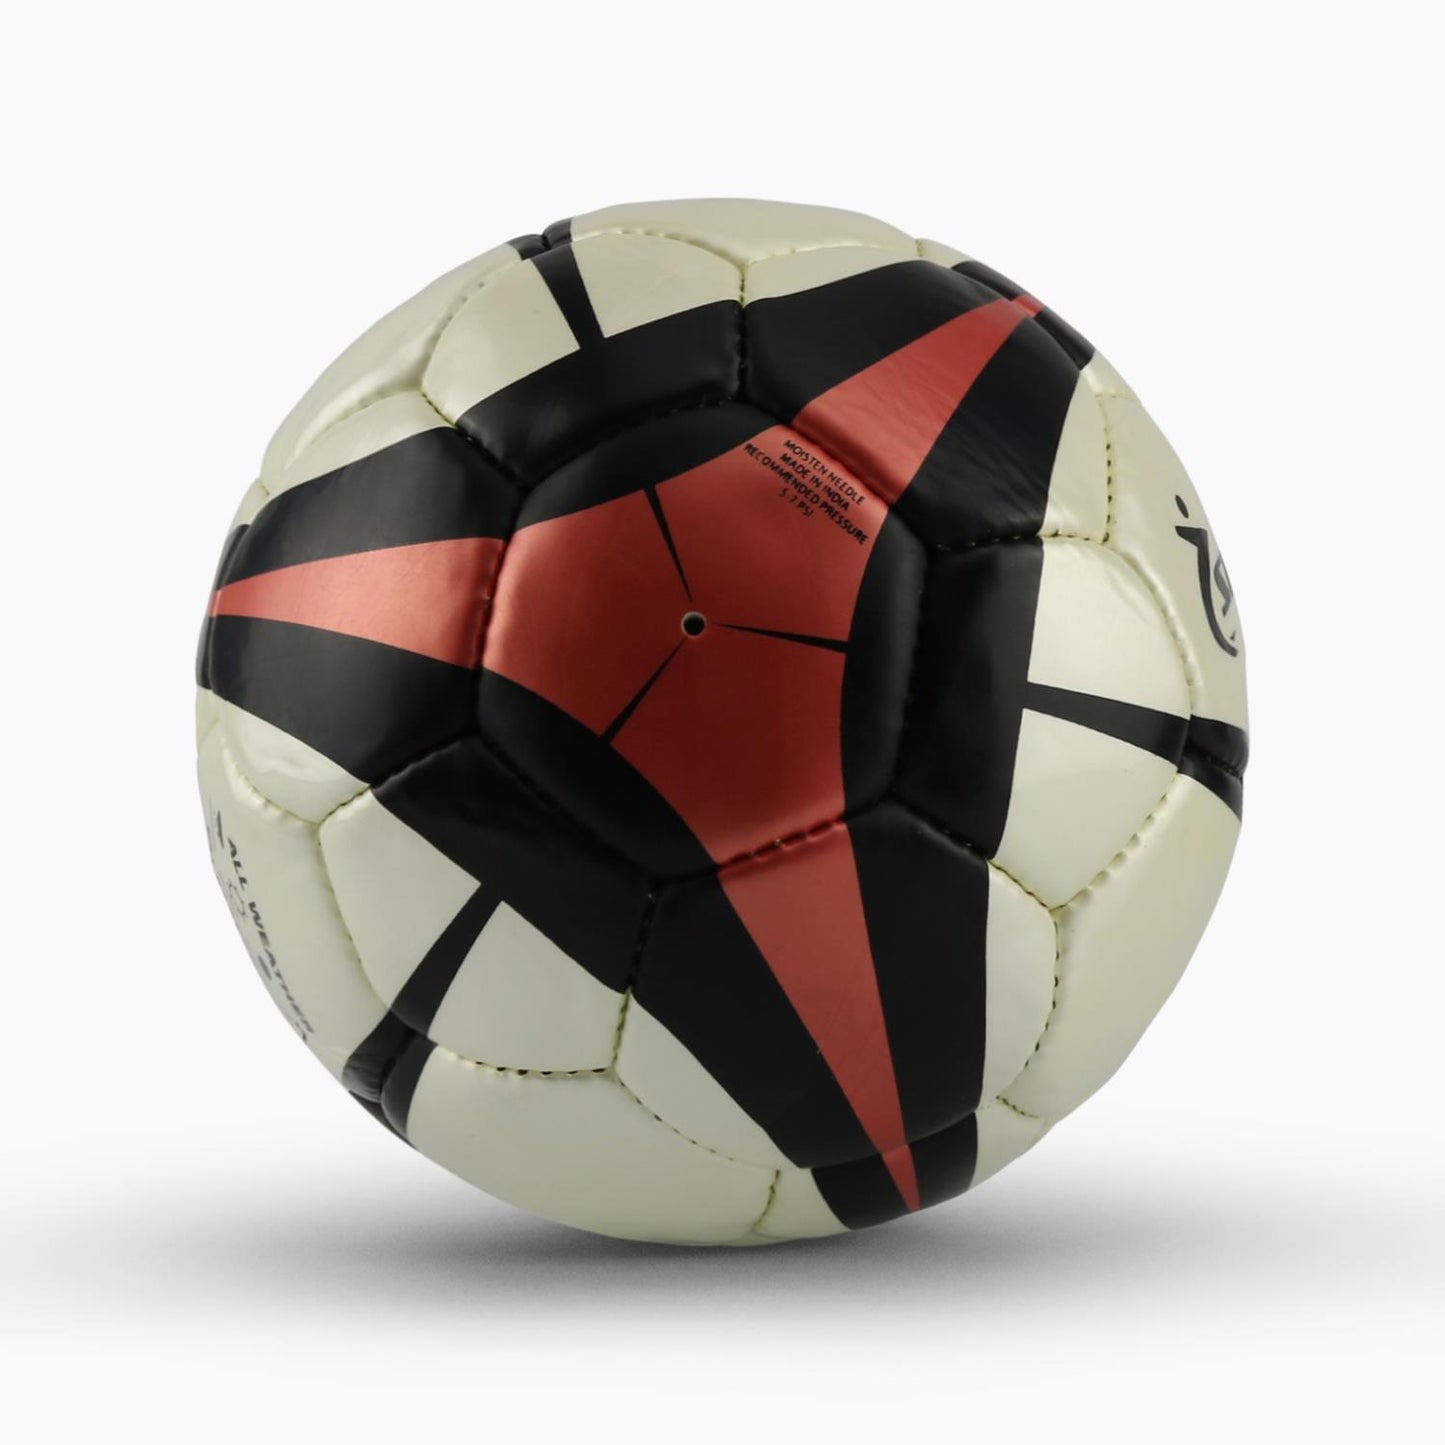 Buy Splay Purlo Floresant PU Football-Football-Splay (UK) Limited-Splay UK Online